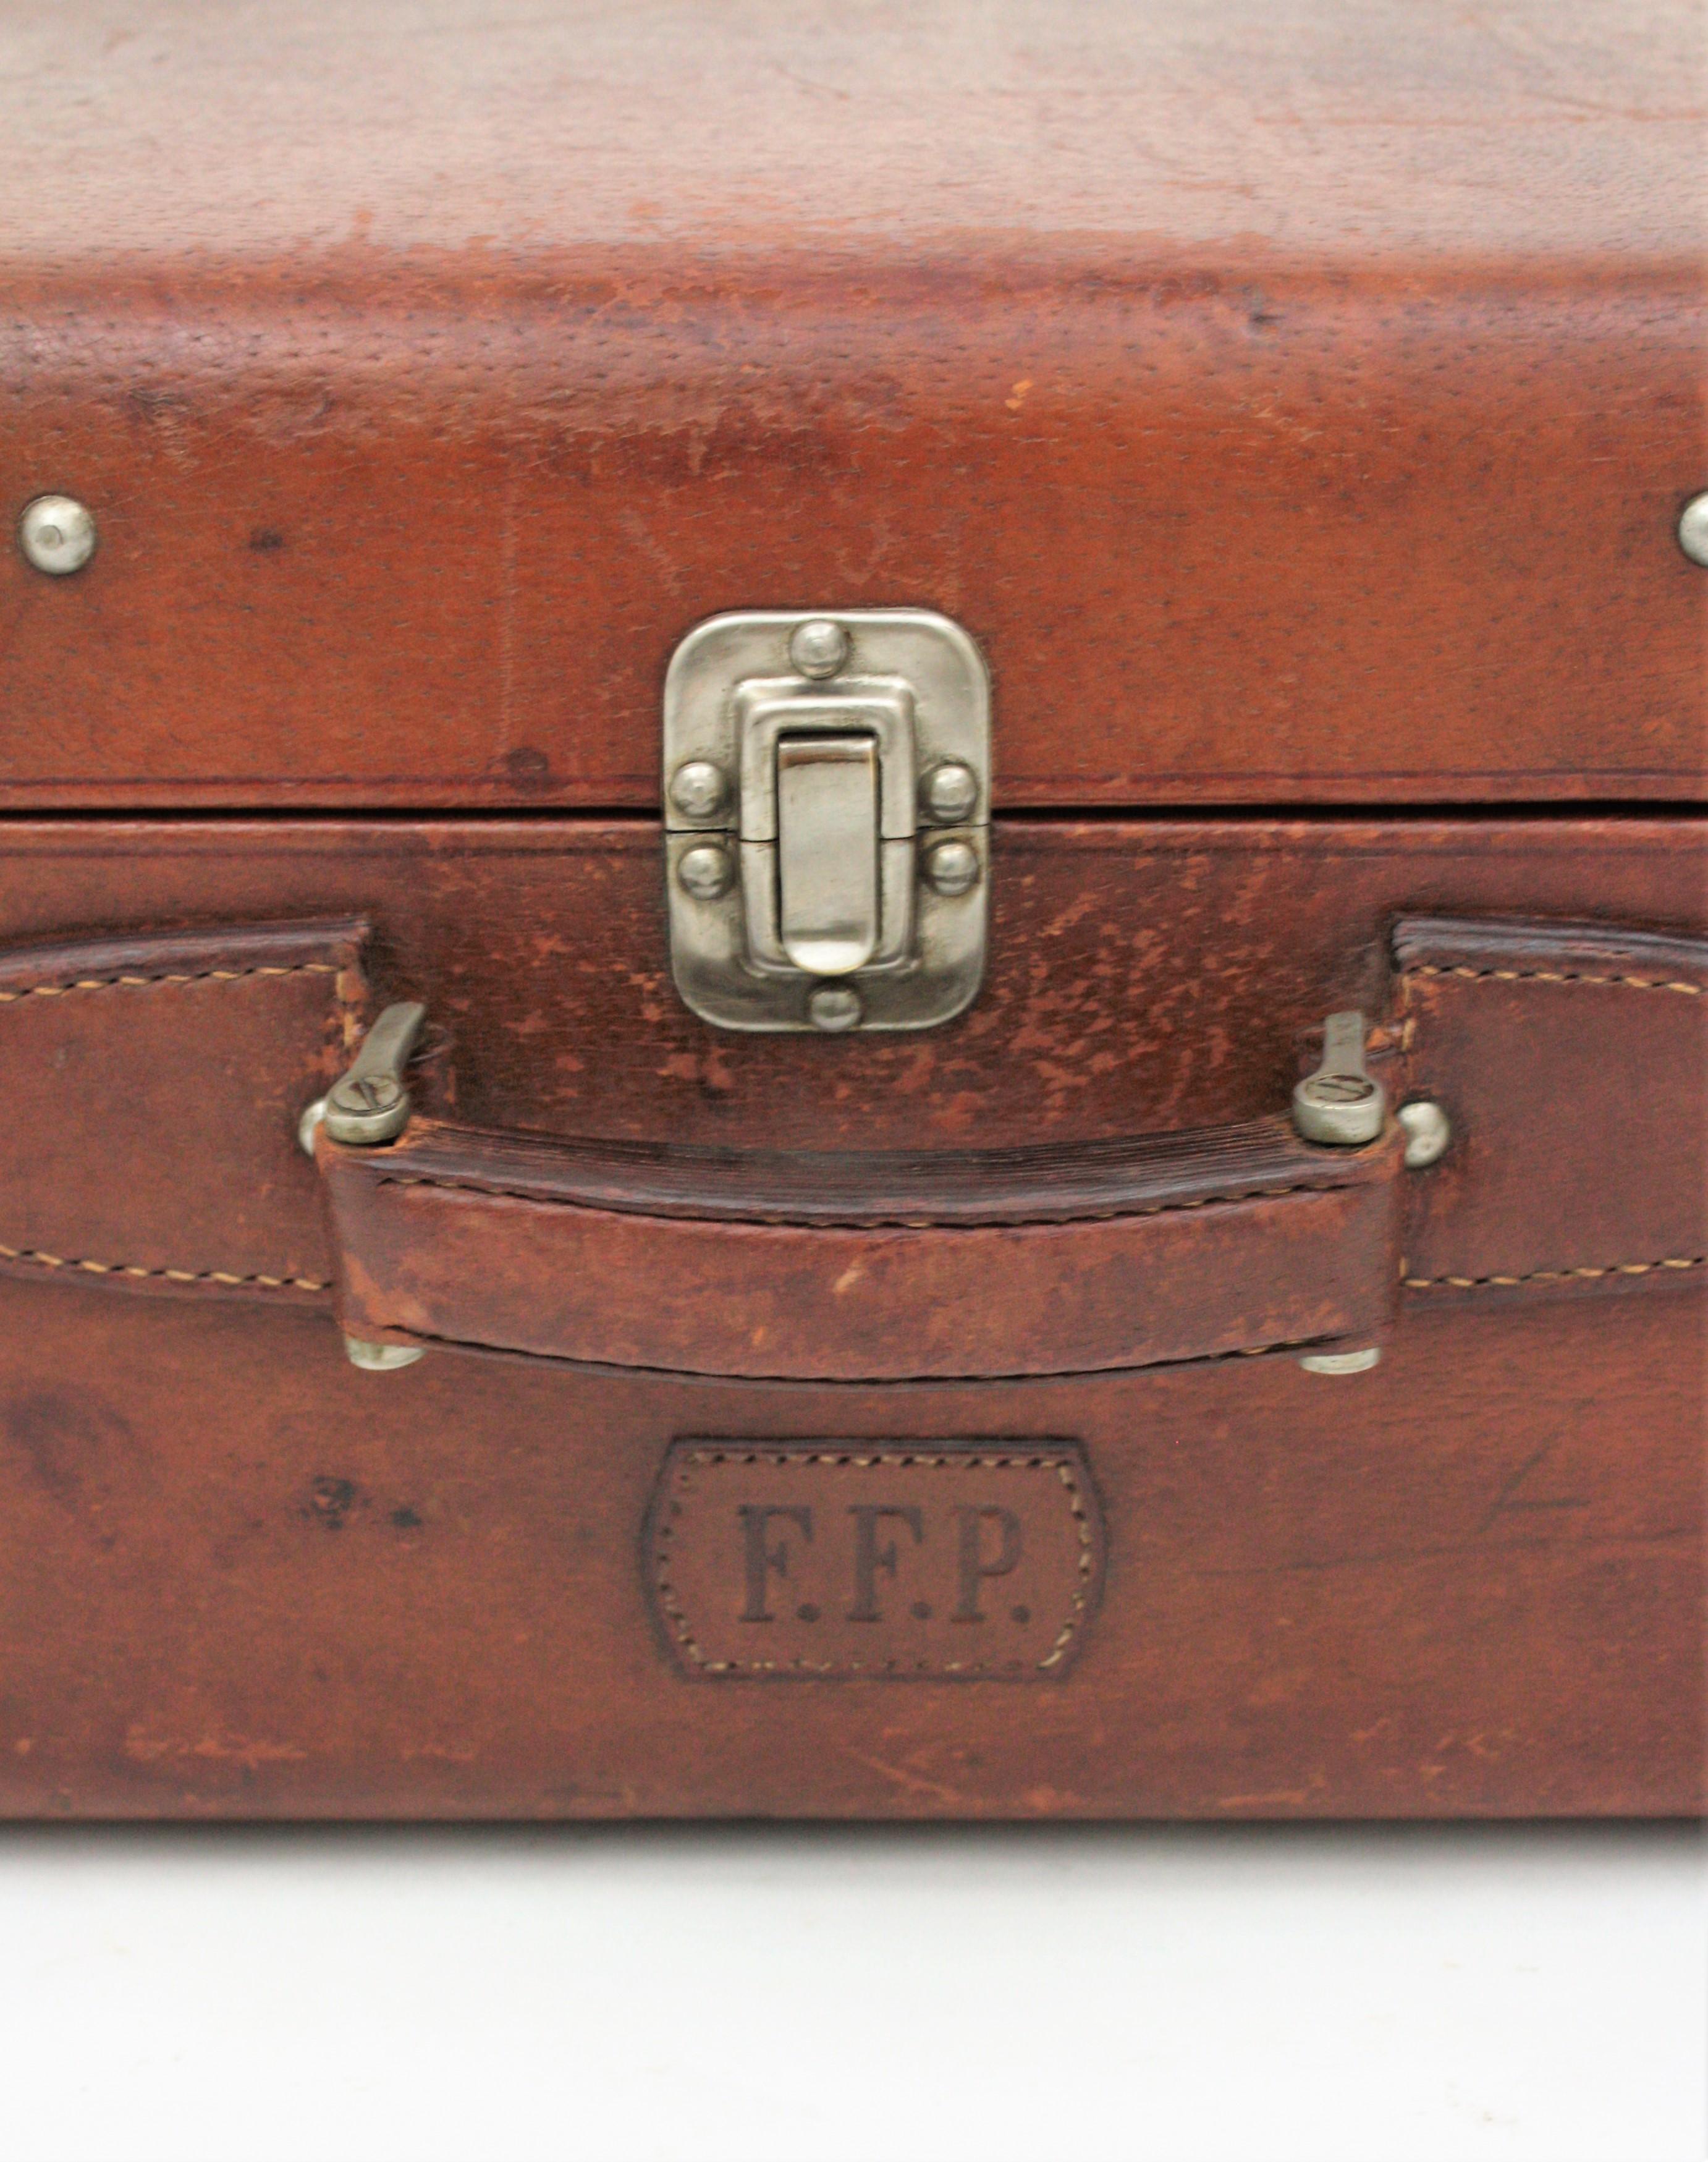 1930s luggage